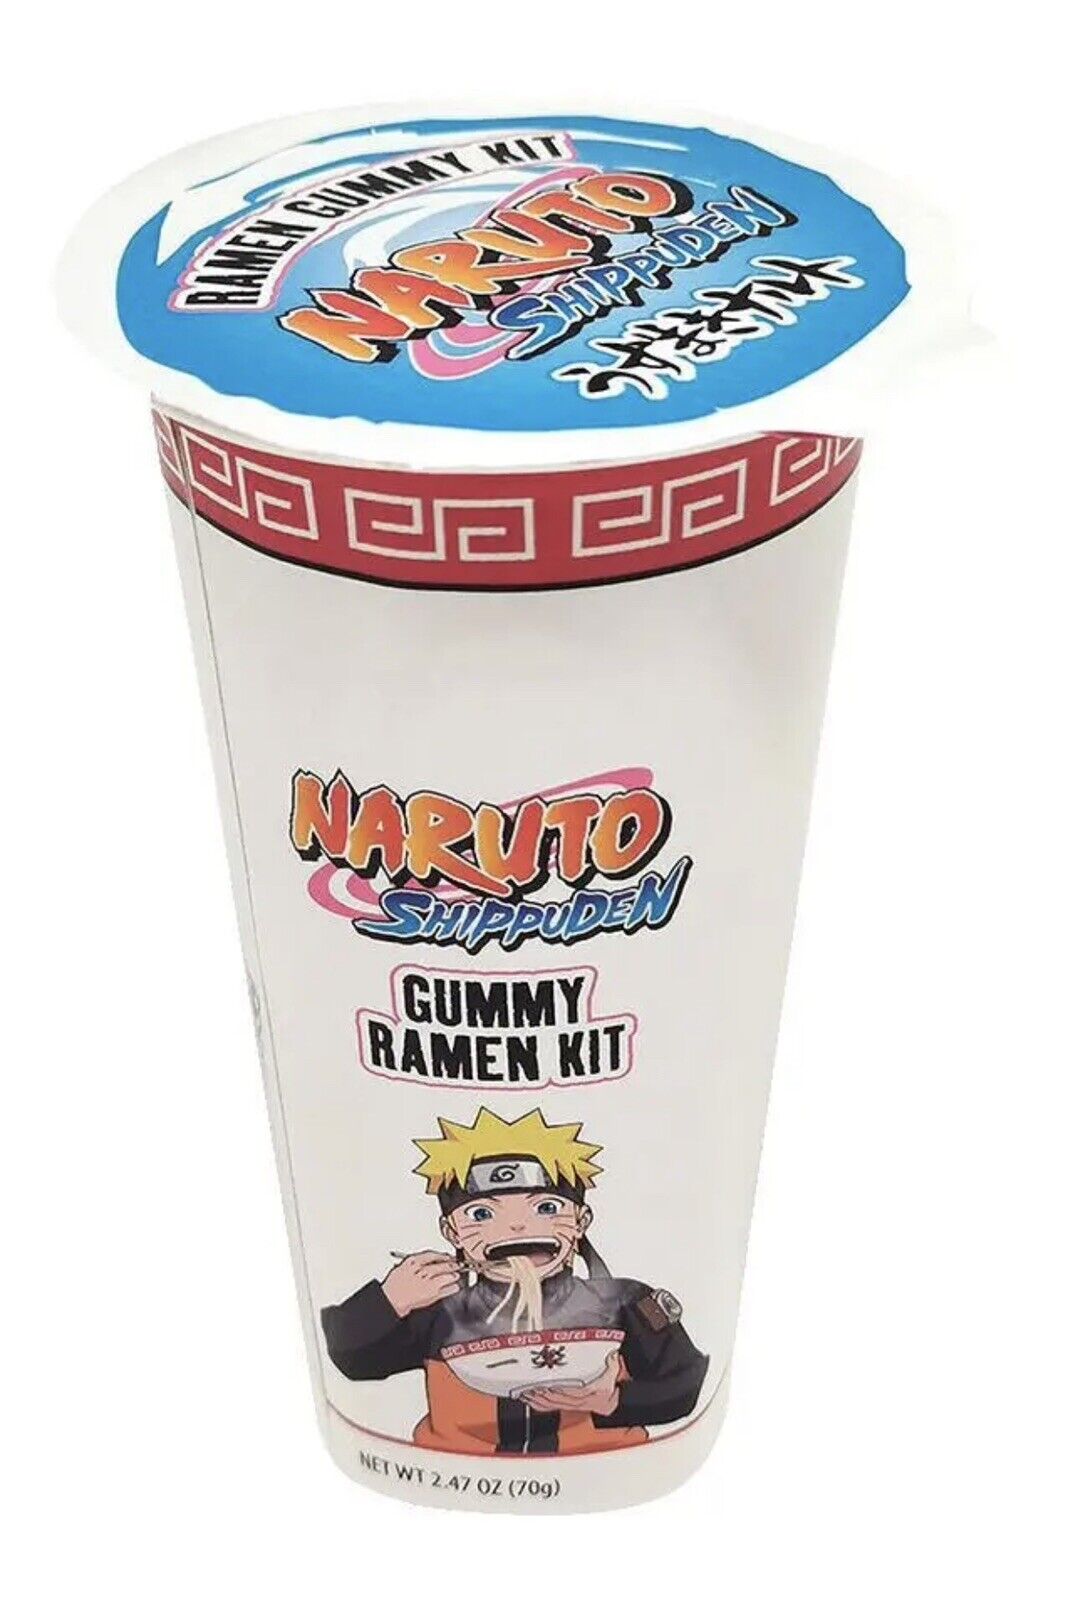 Naruto Shippuden Anime Itadakimasu Gummy Ramen Kit Box - New / Sealed Candy